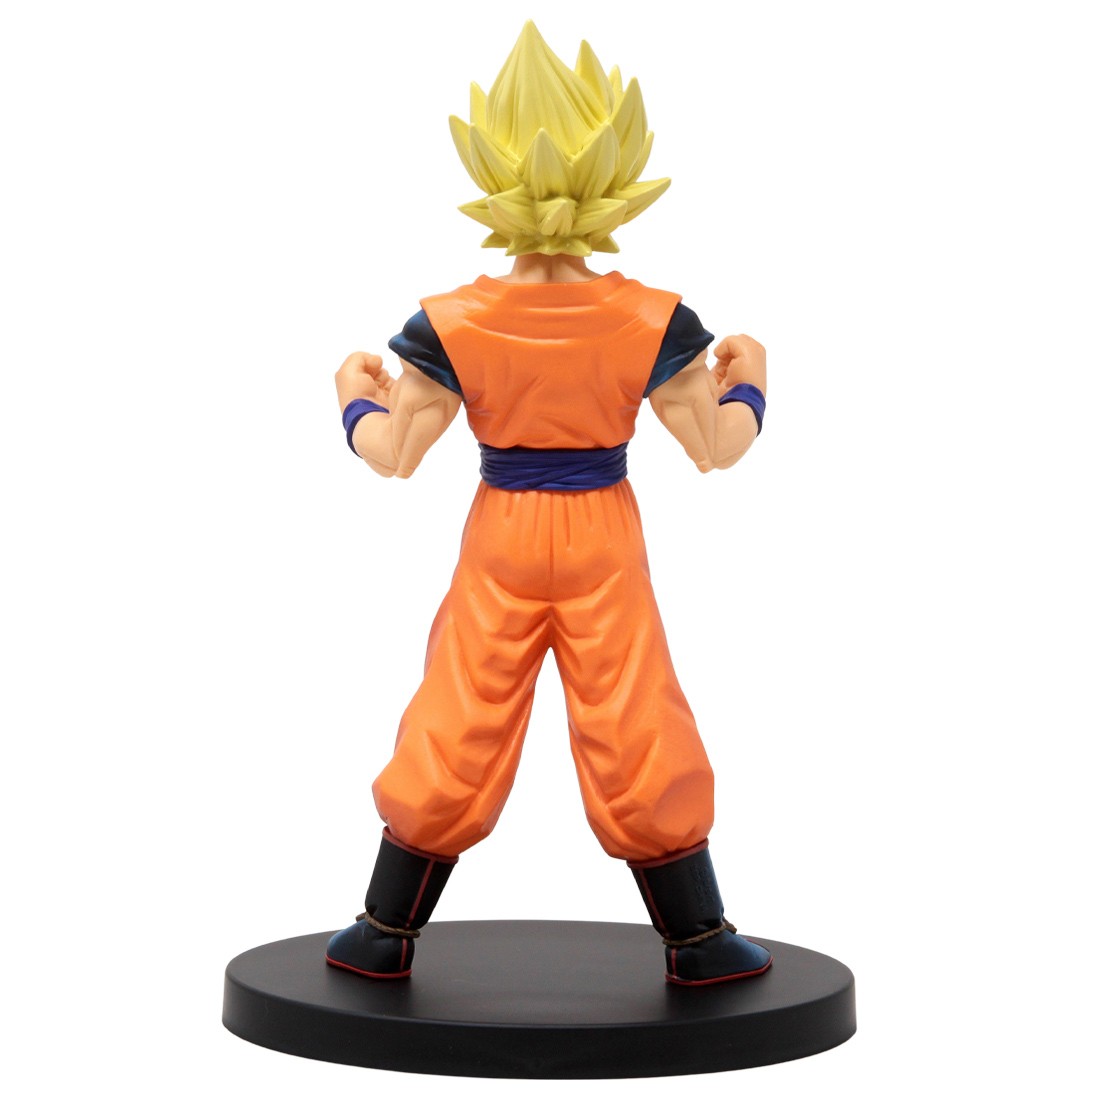 28cm Bandai Super Saiyan Dragon Ball Son Goku Action Figures